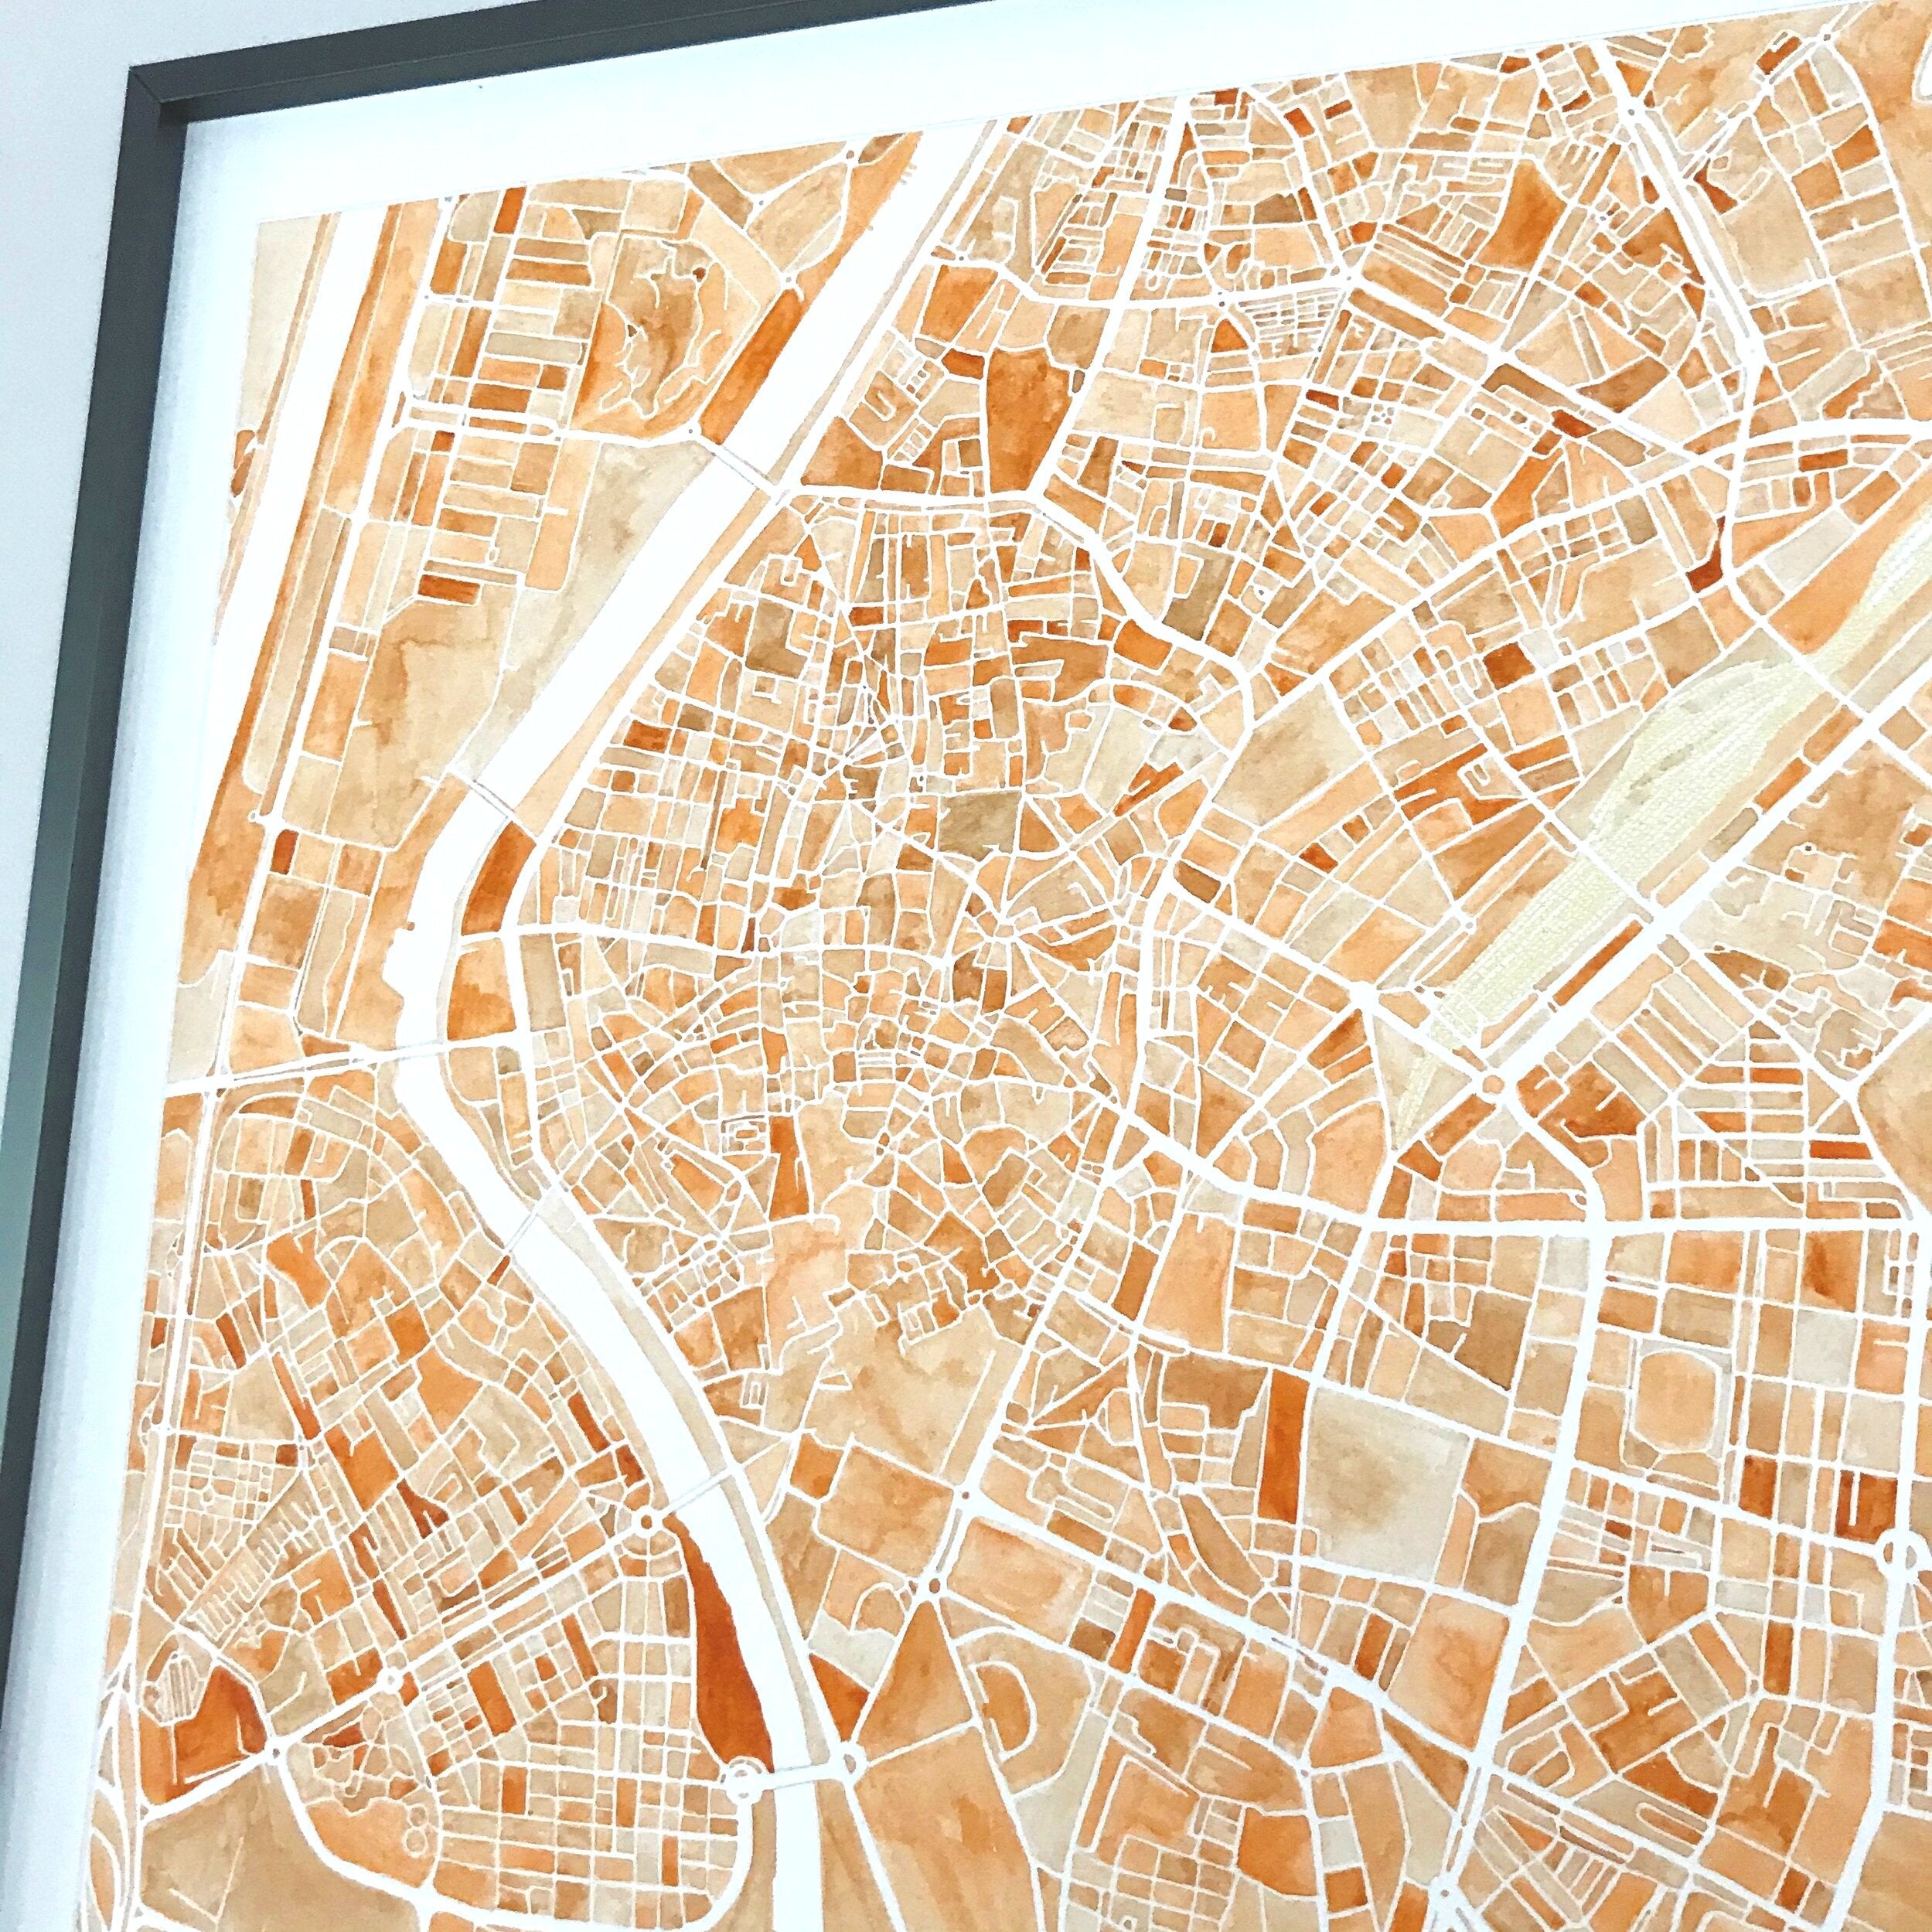 SEVILLE Watercolor City Blocks Map: PRINT